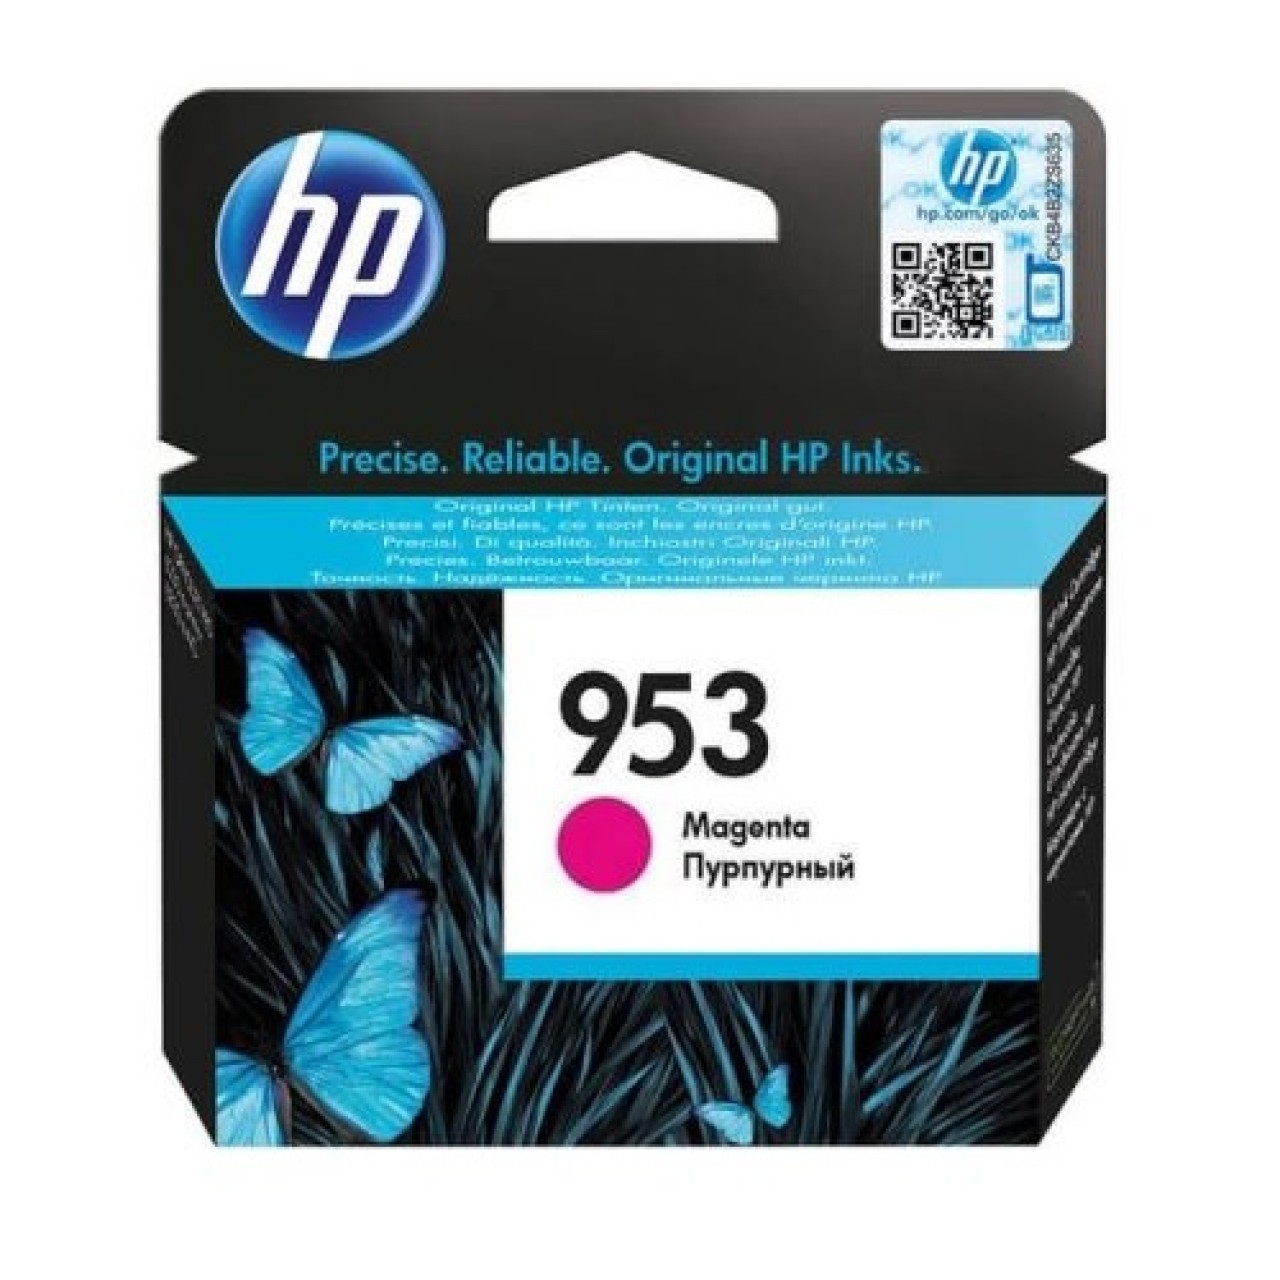 HP 953 Matzenta Orininal - Ματζέντα Γνήσιο Μελάνι Εκτυπωτή Hewlett-Packard